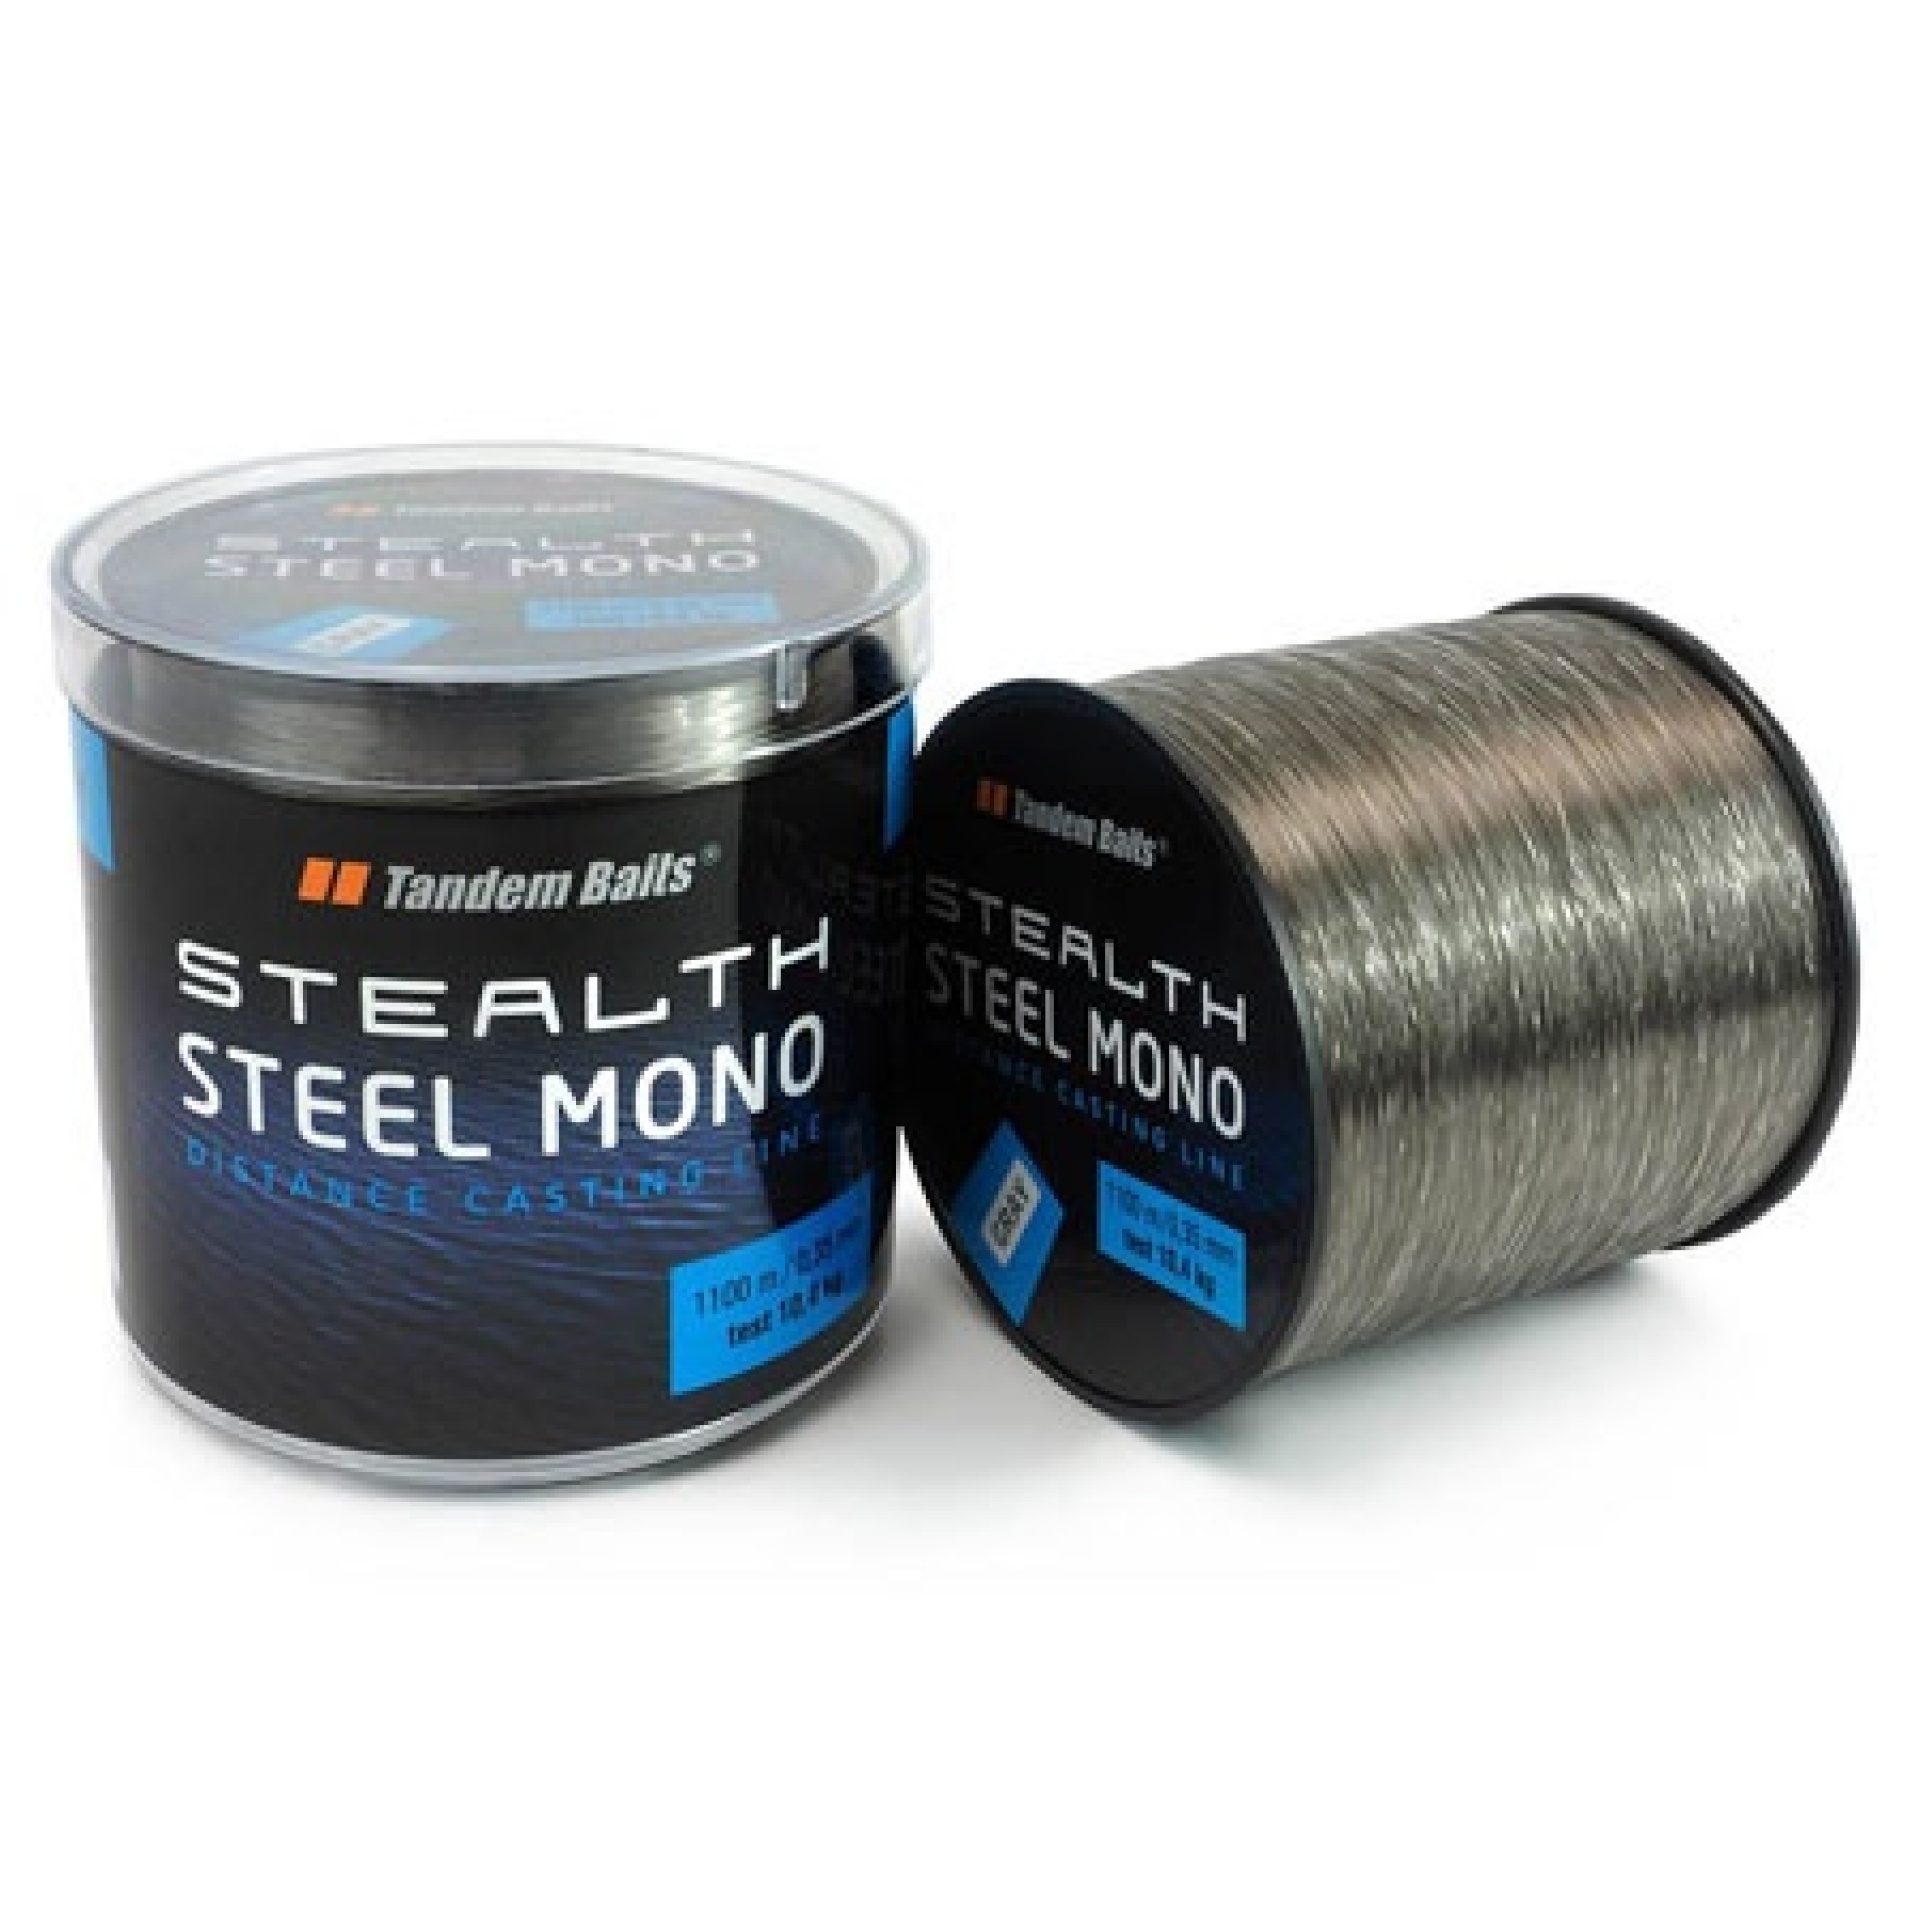 Tandem Baits Stealth Steel Mono - Línea de pesca